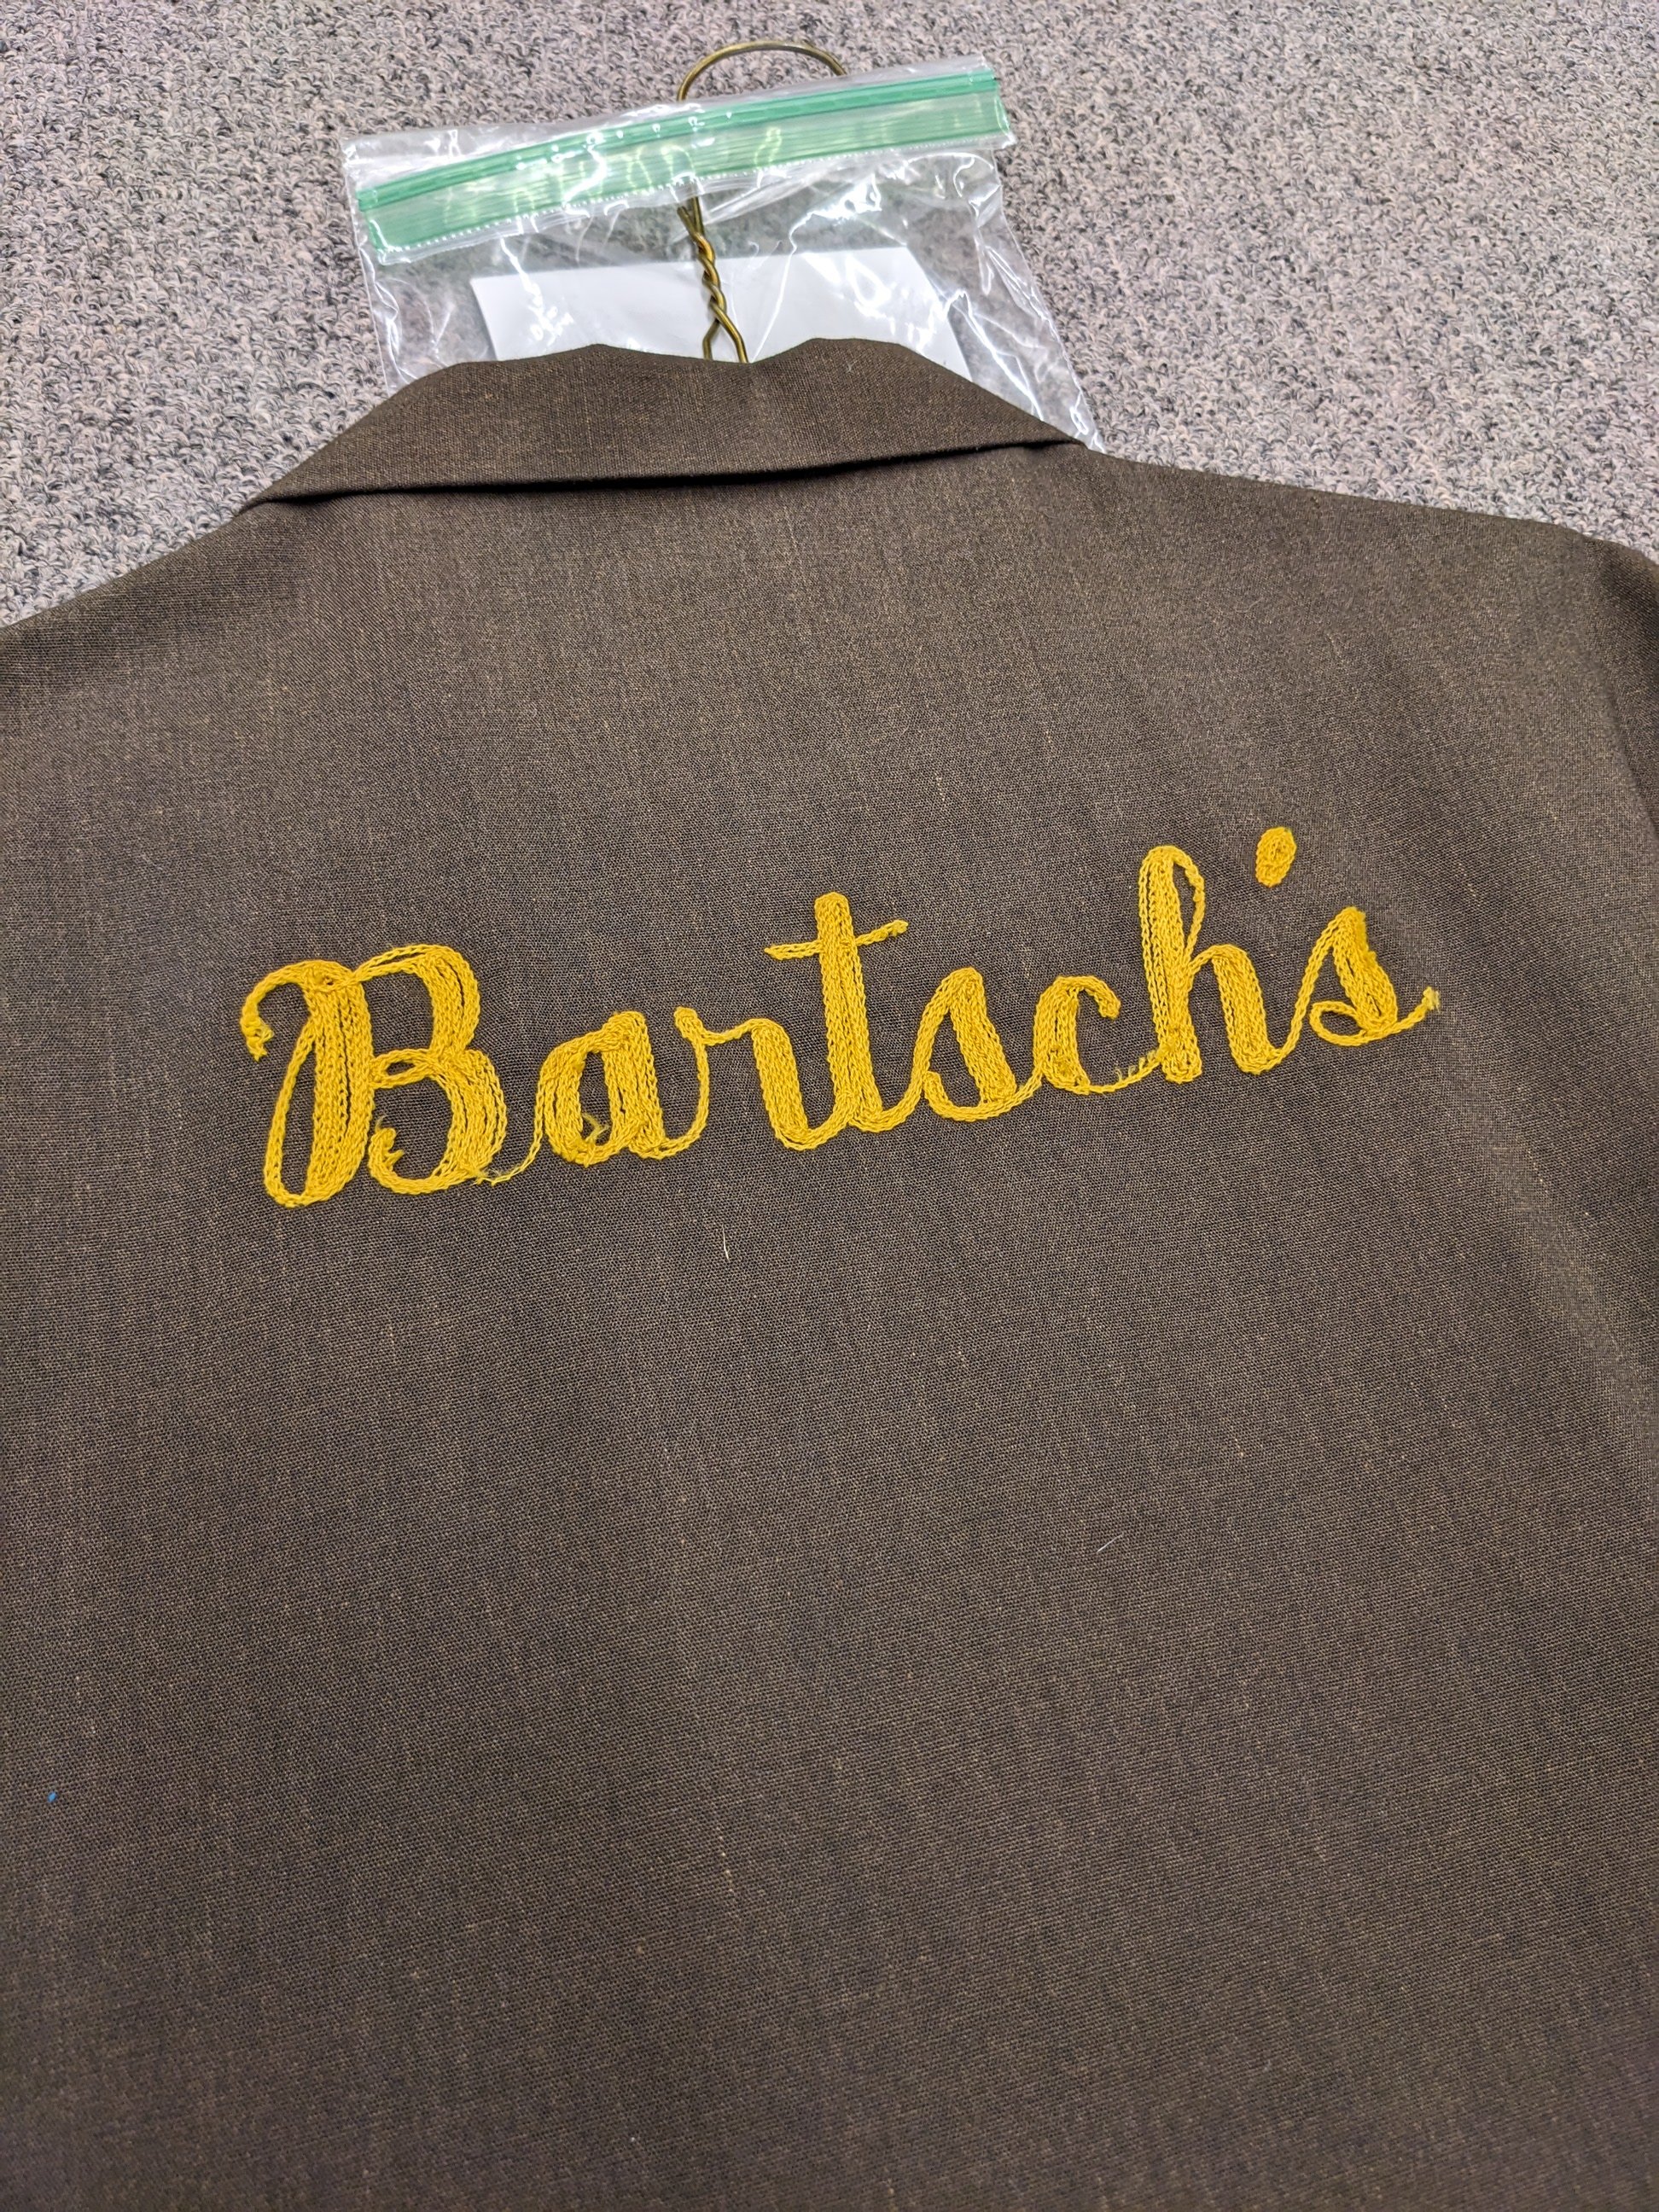 Bartsch's Store Shirts or Smocks